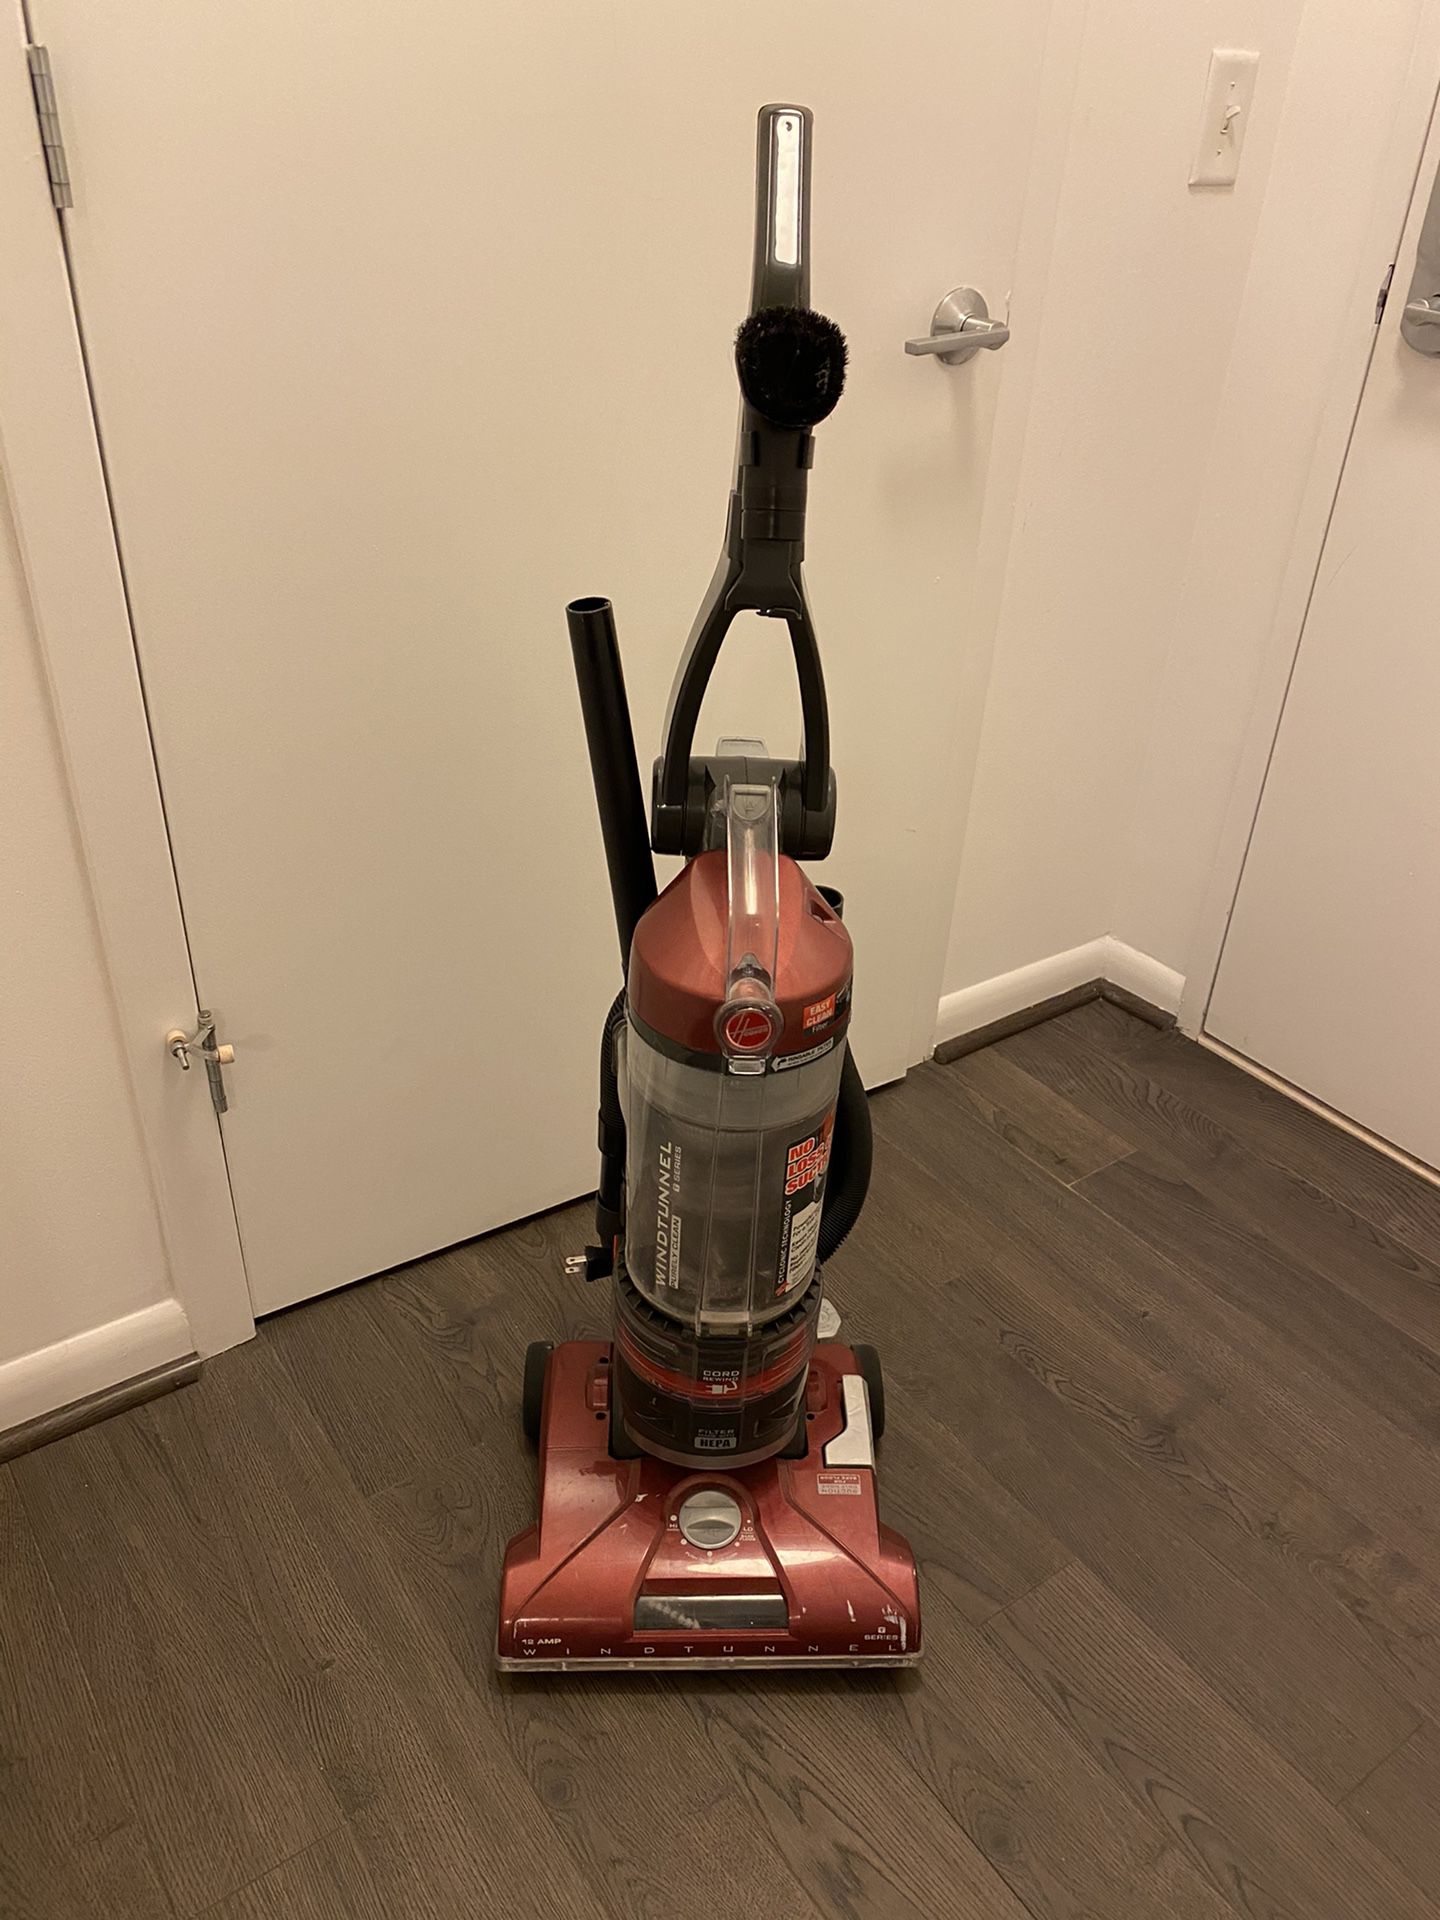 Hoover vacuum cleaner- no pets- super clean